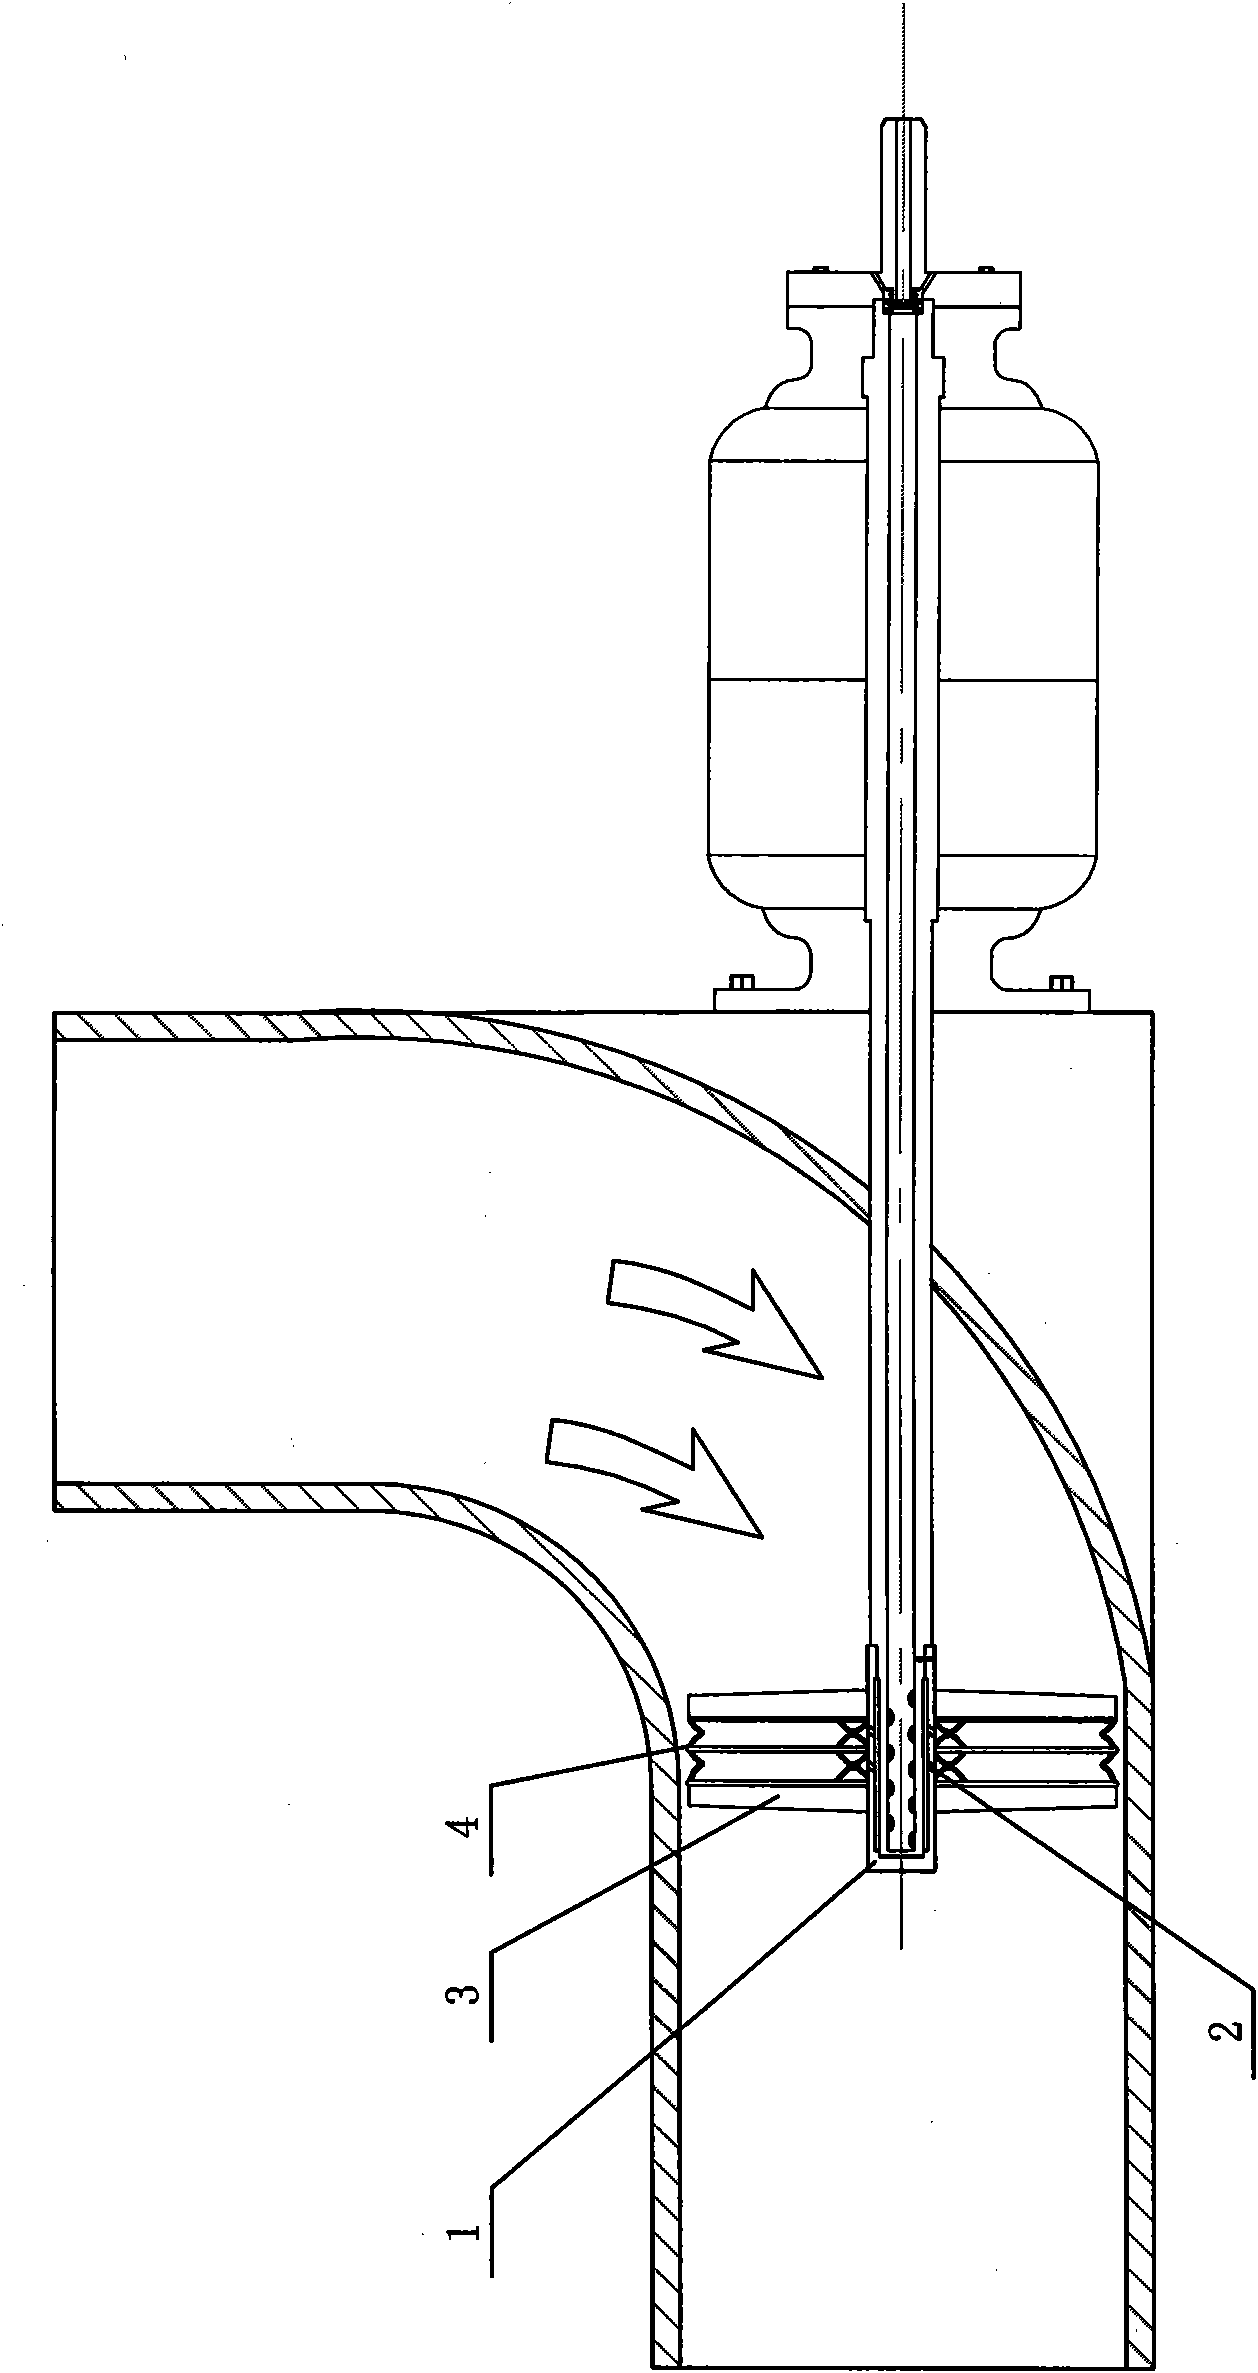 Novel centrifugal misting fan blade